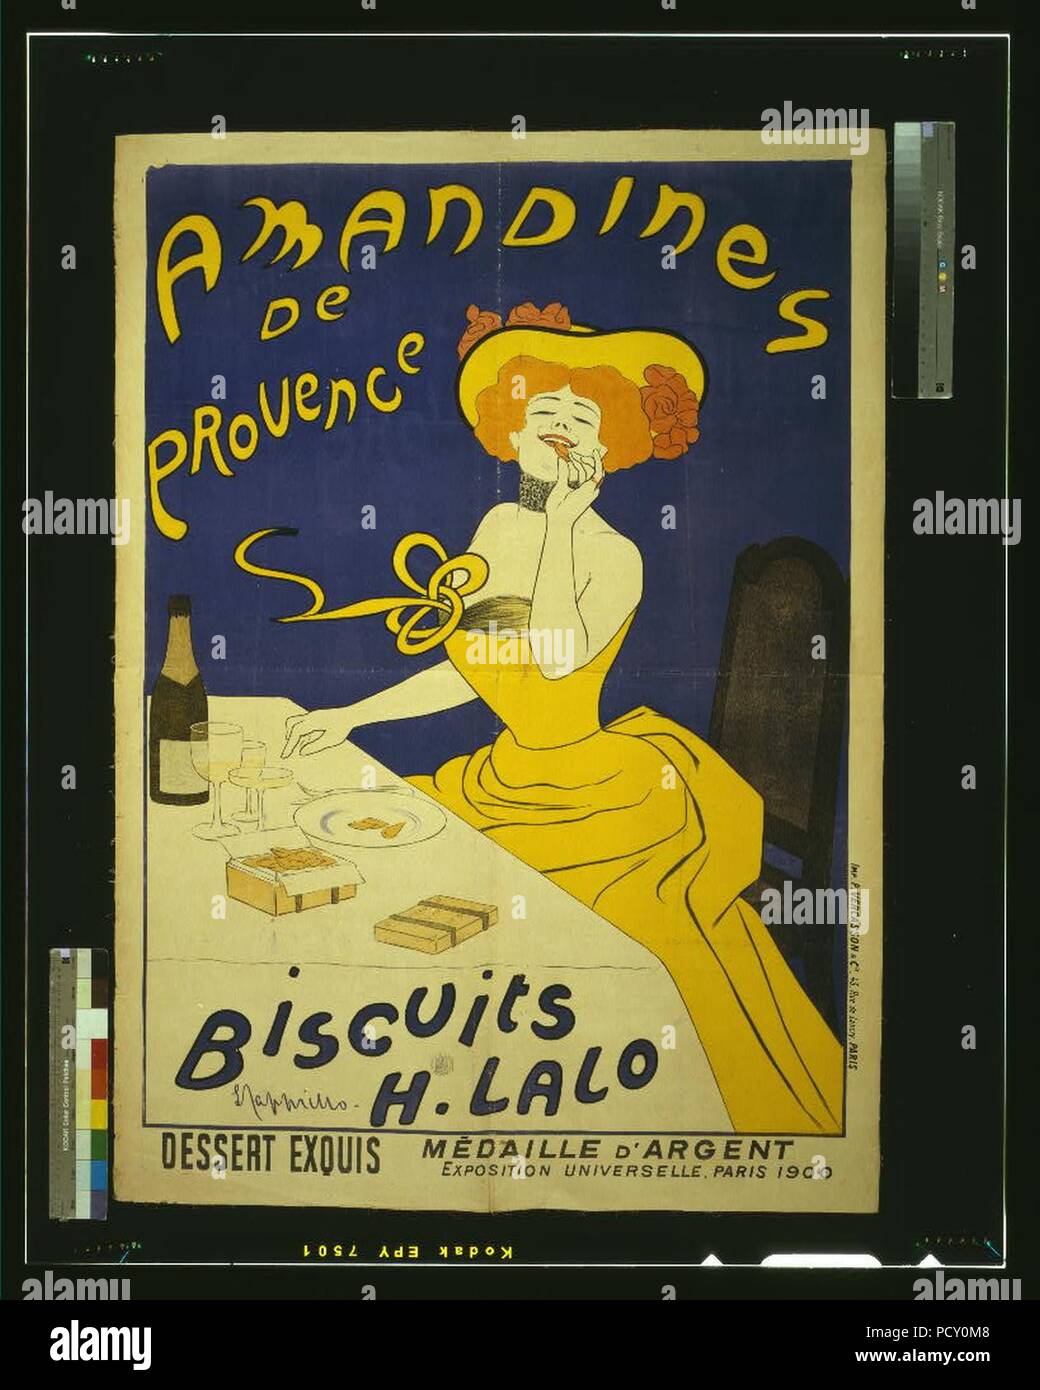 Amandines de Provence. Biscuits H. Lalo - L. Cappiello. Stock Photo